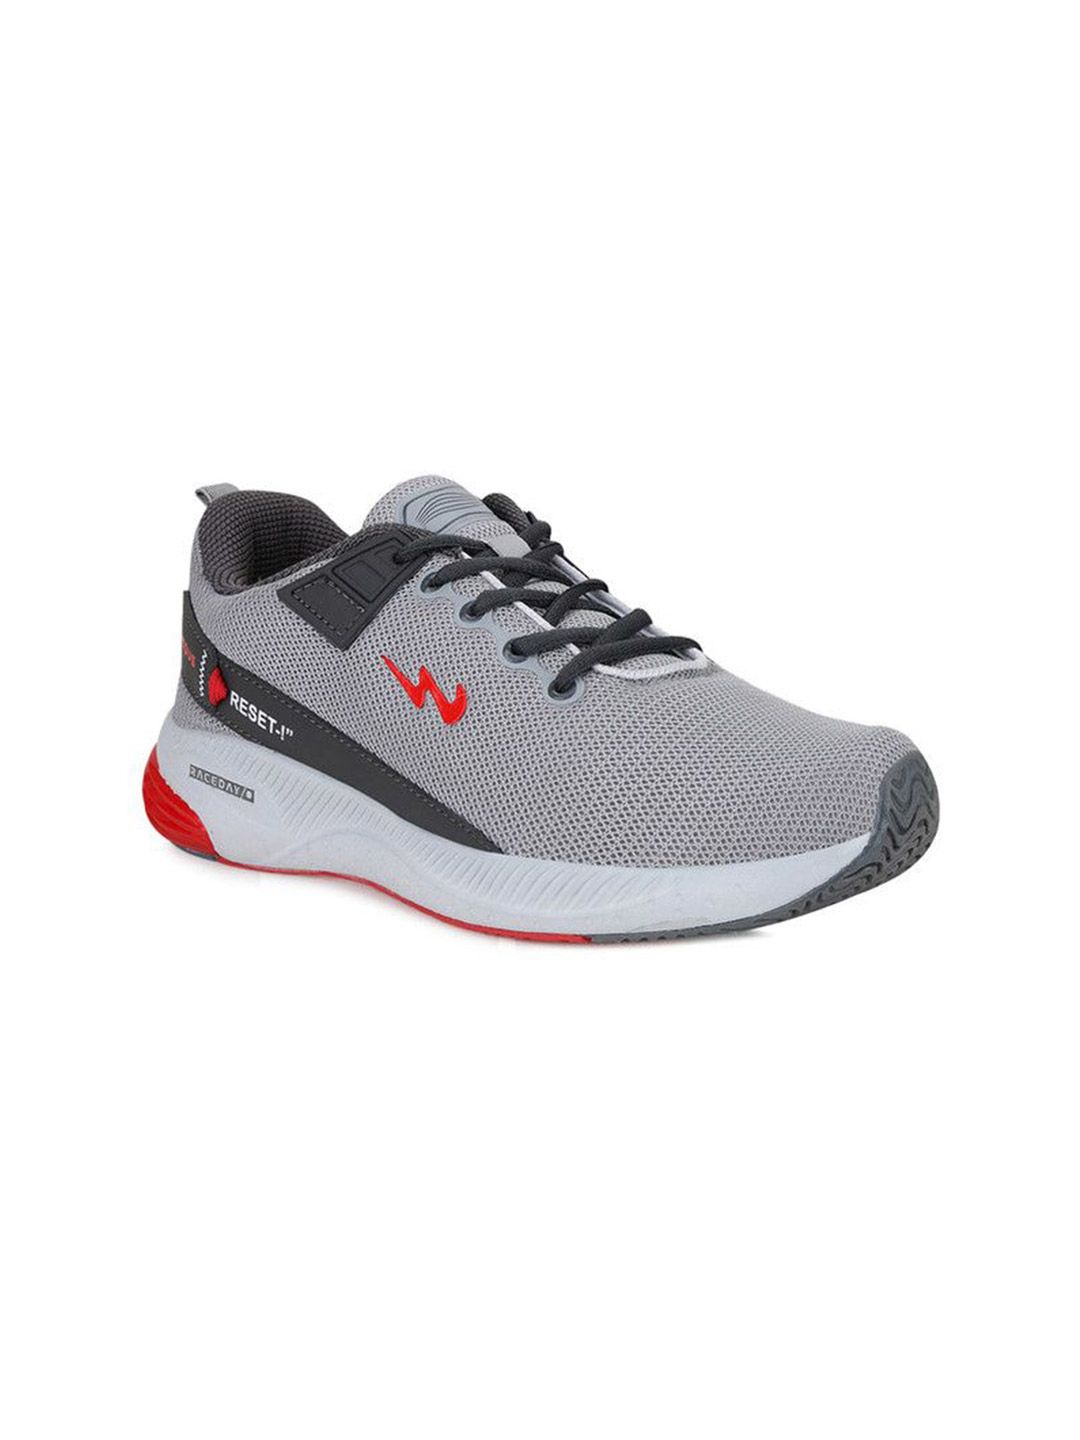 Buy Men Refresh Pro Grey Running Shoes From Fancode Shop.